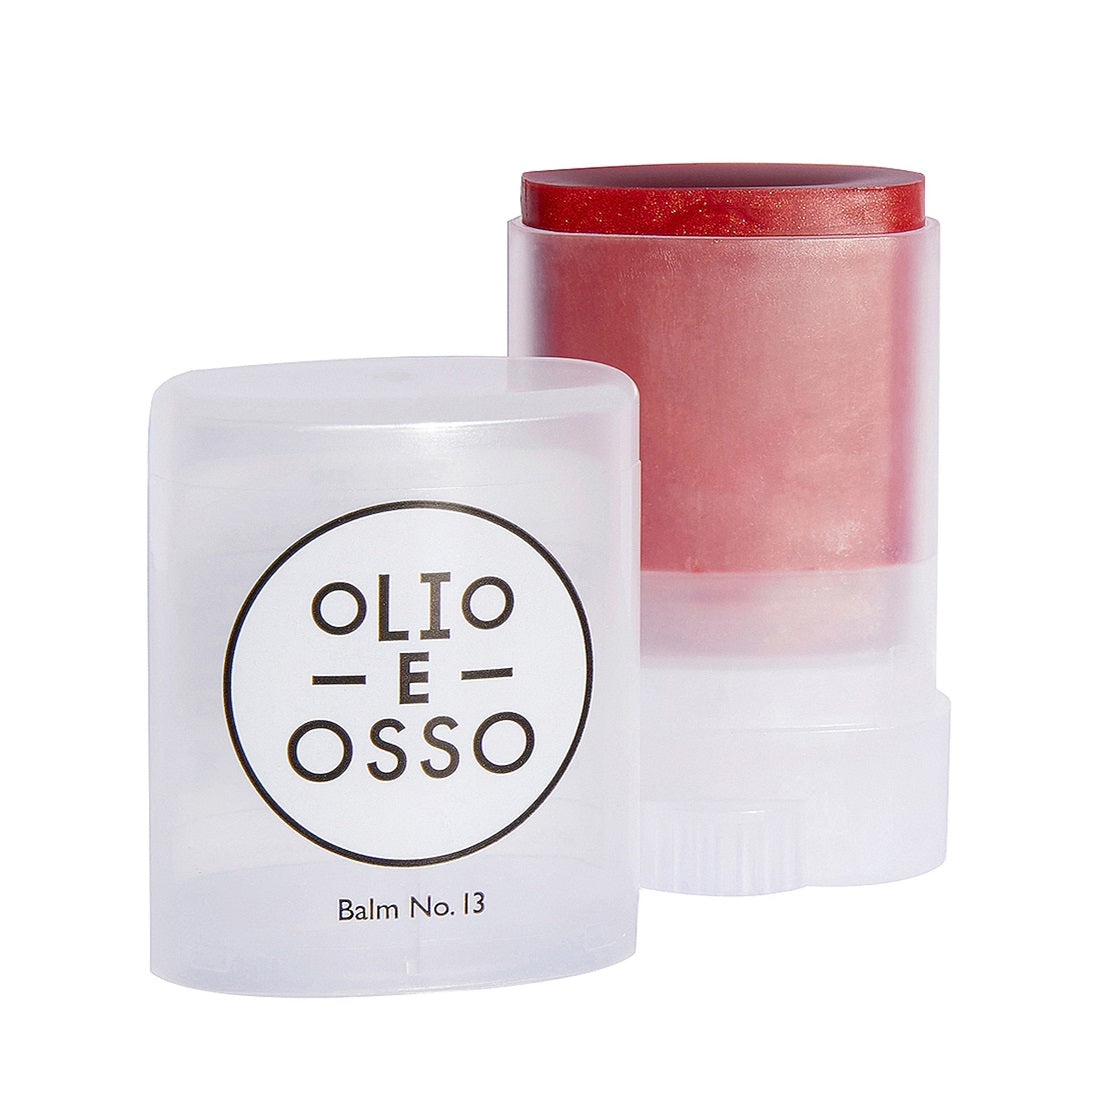 Olio E Osso Lip and Cheek Balm 10g - 13 Poppy